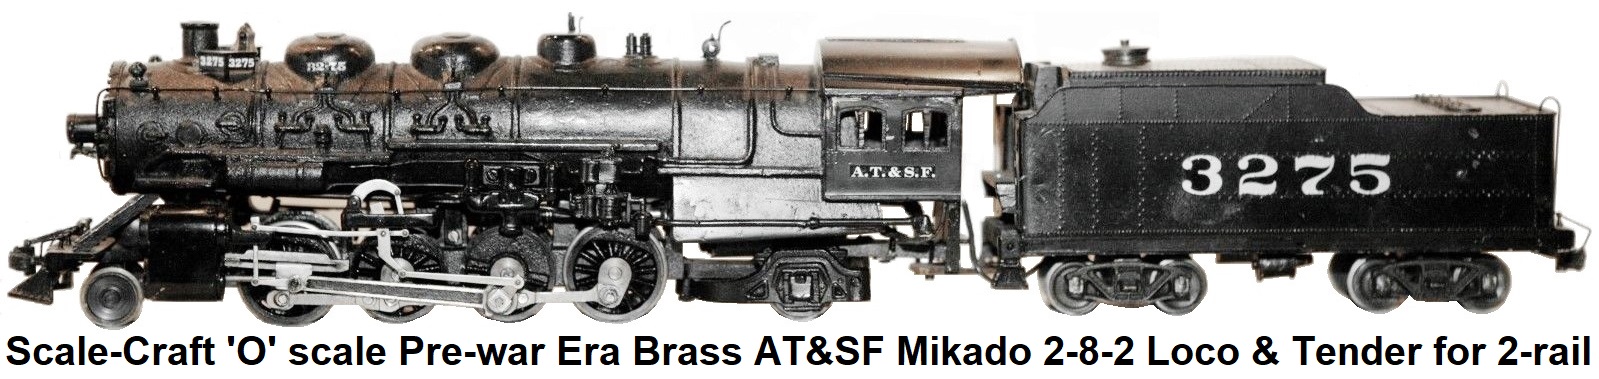 Scale-Craft #3275 'O' scale Pre-war era Brass A.T.&S.F. Mikado 2-8-2 Loco & Tender for 2-rail